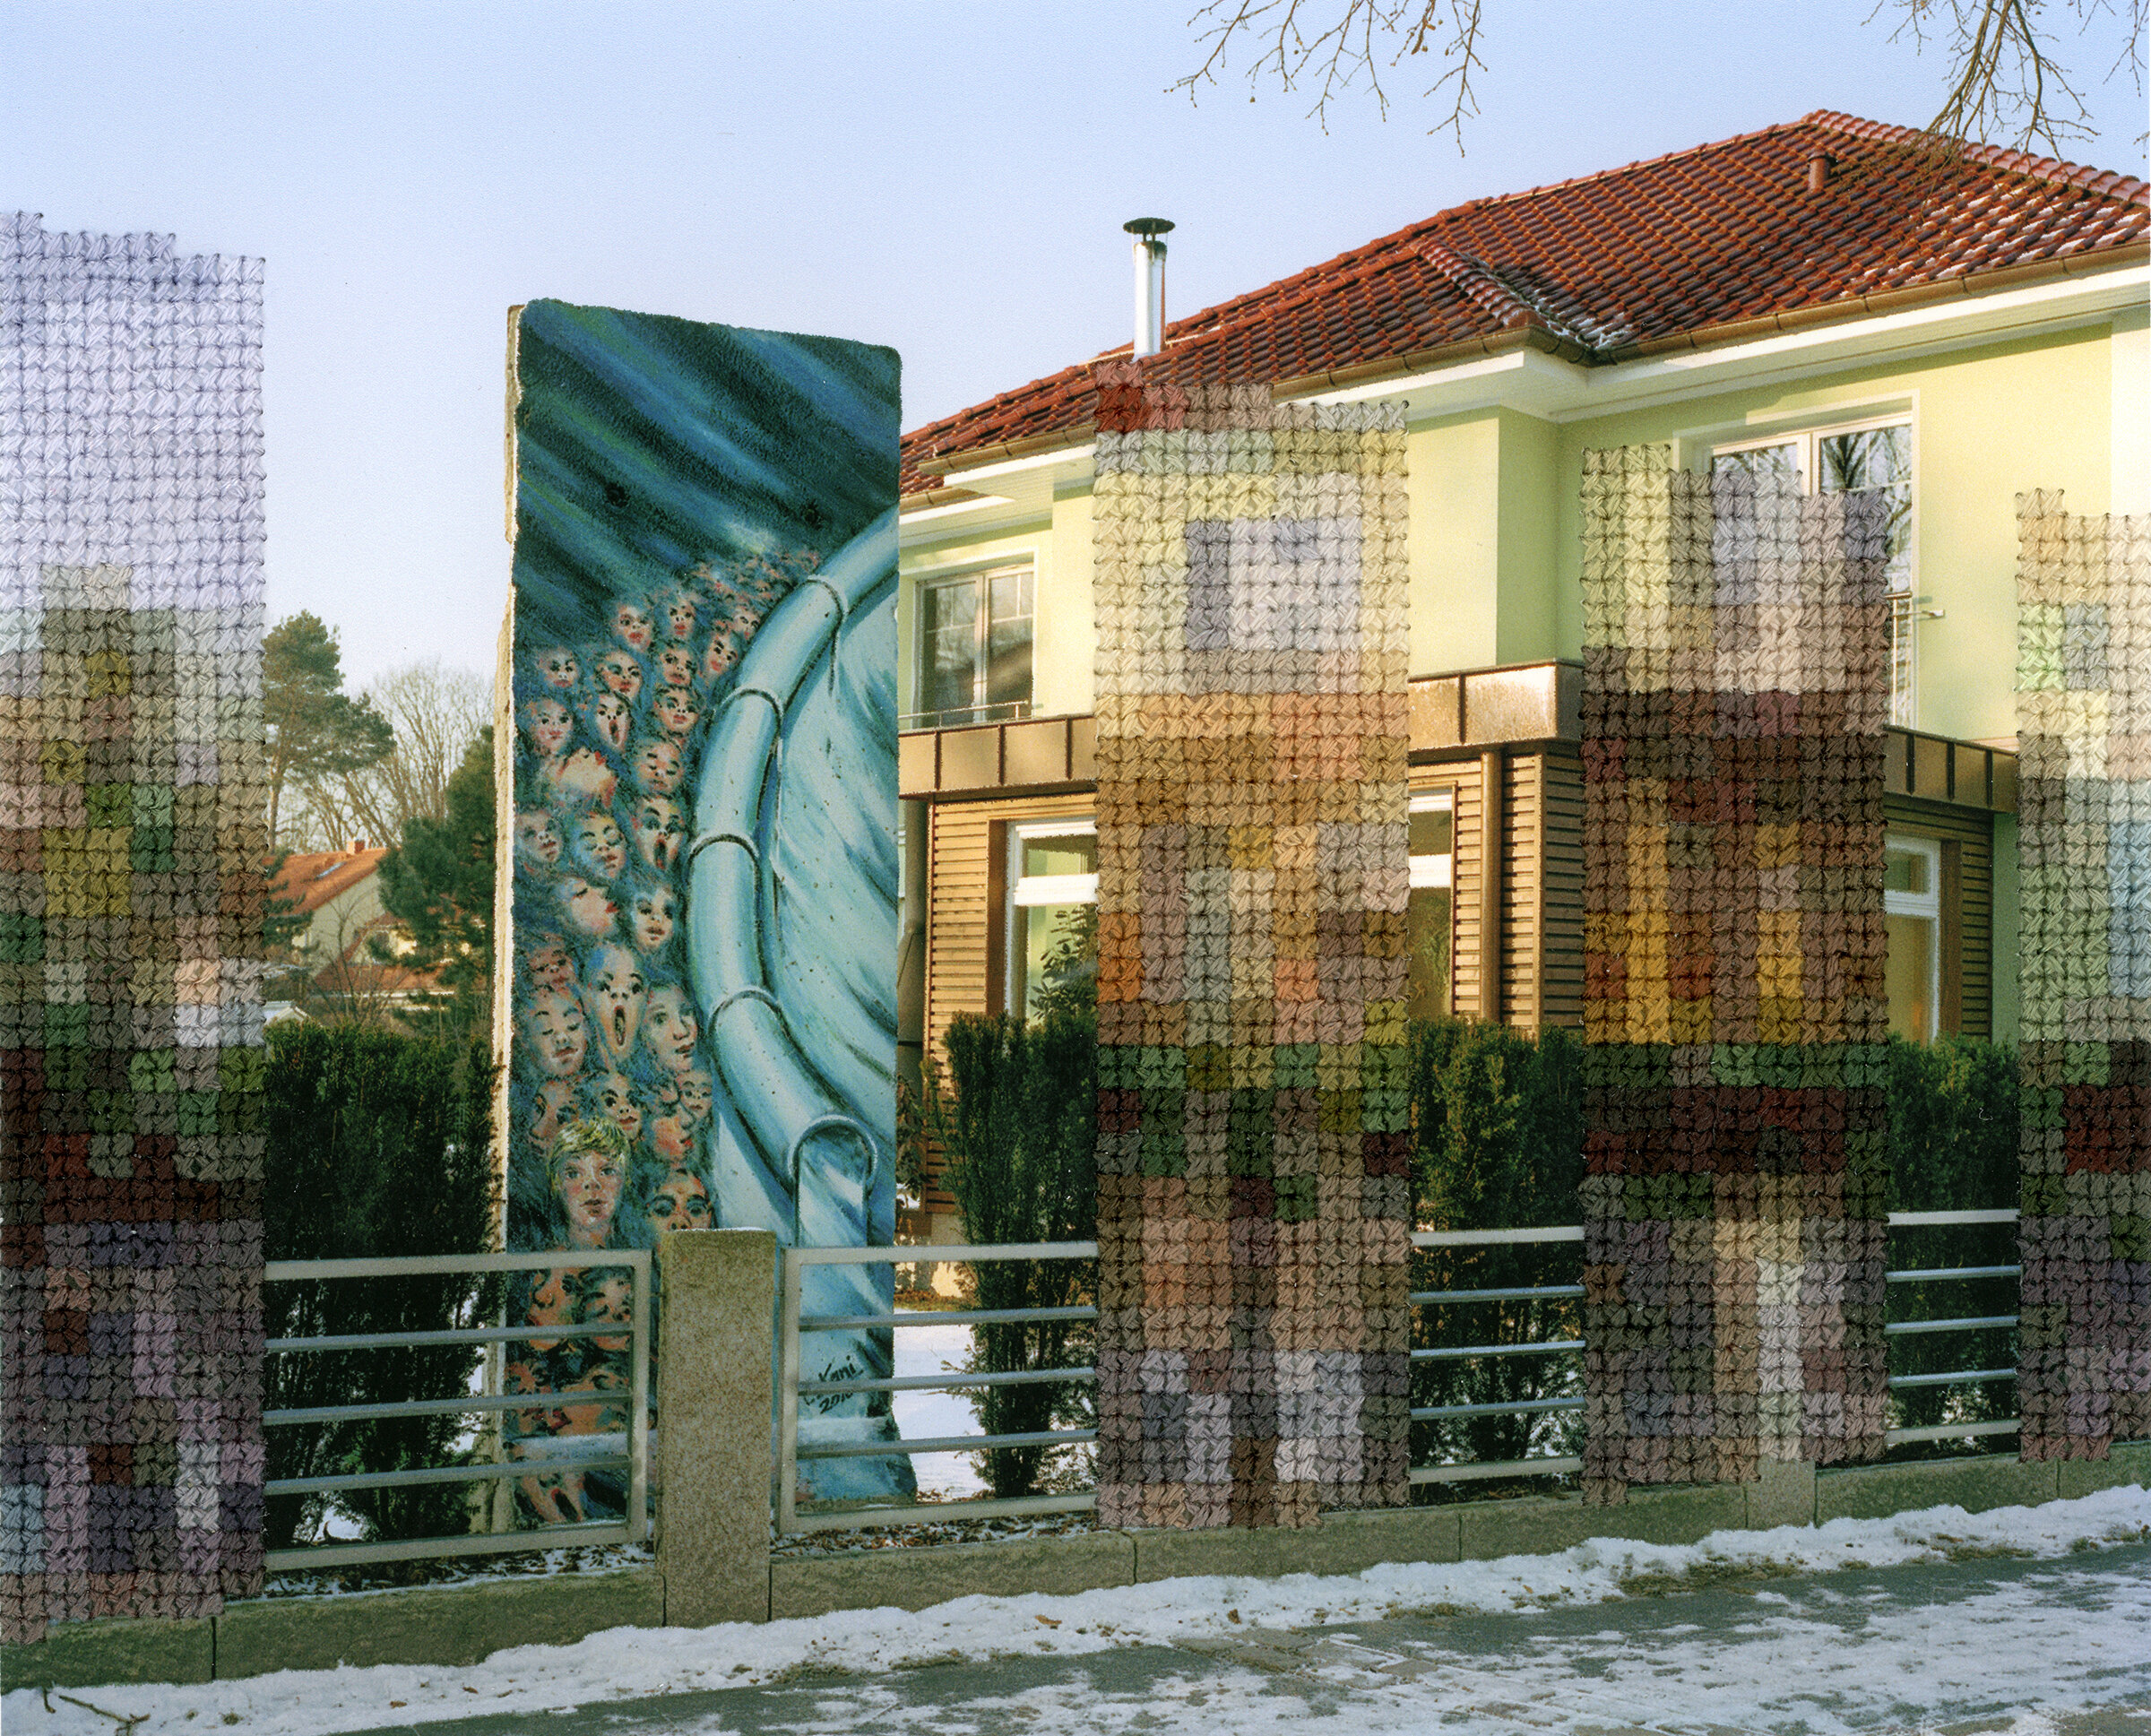 Yard and Remaining Wall Panel, Hermsdorf